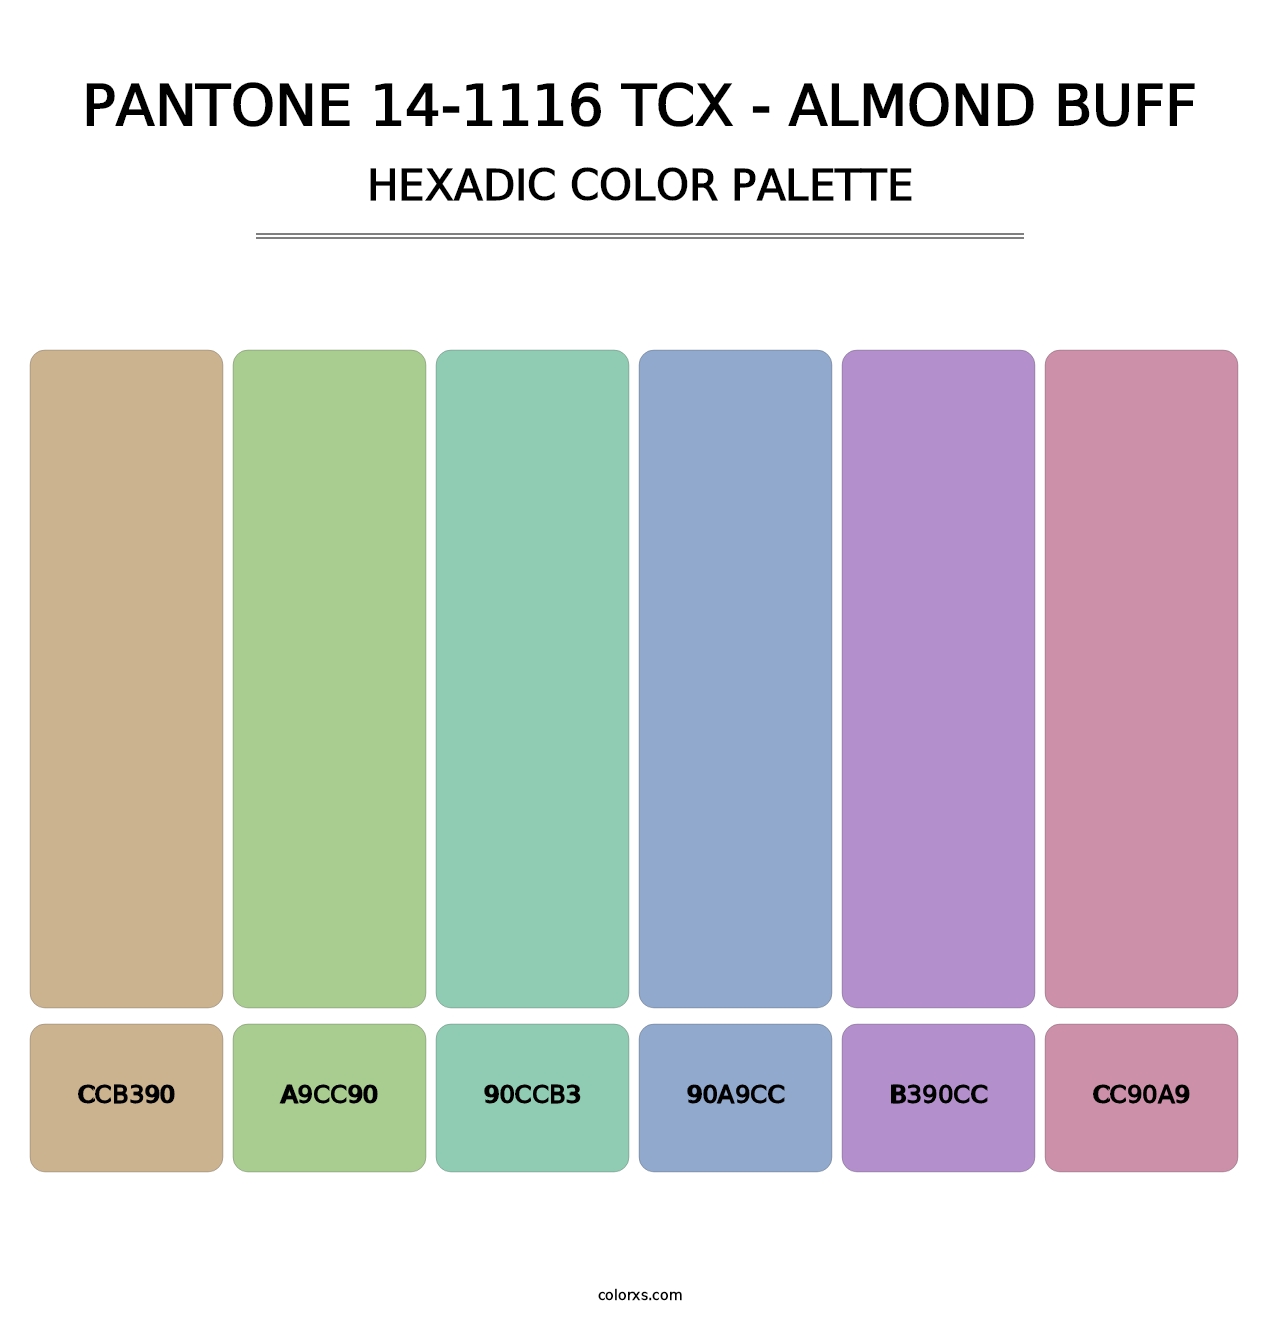 PANTONE 14-1116 TCX - Almond Buff - Hexadic Color Palette